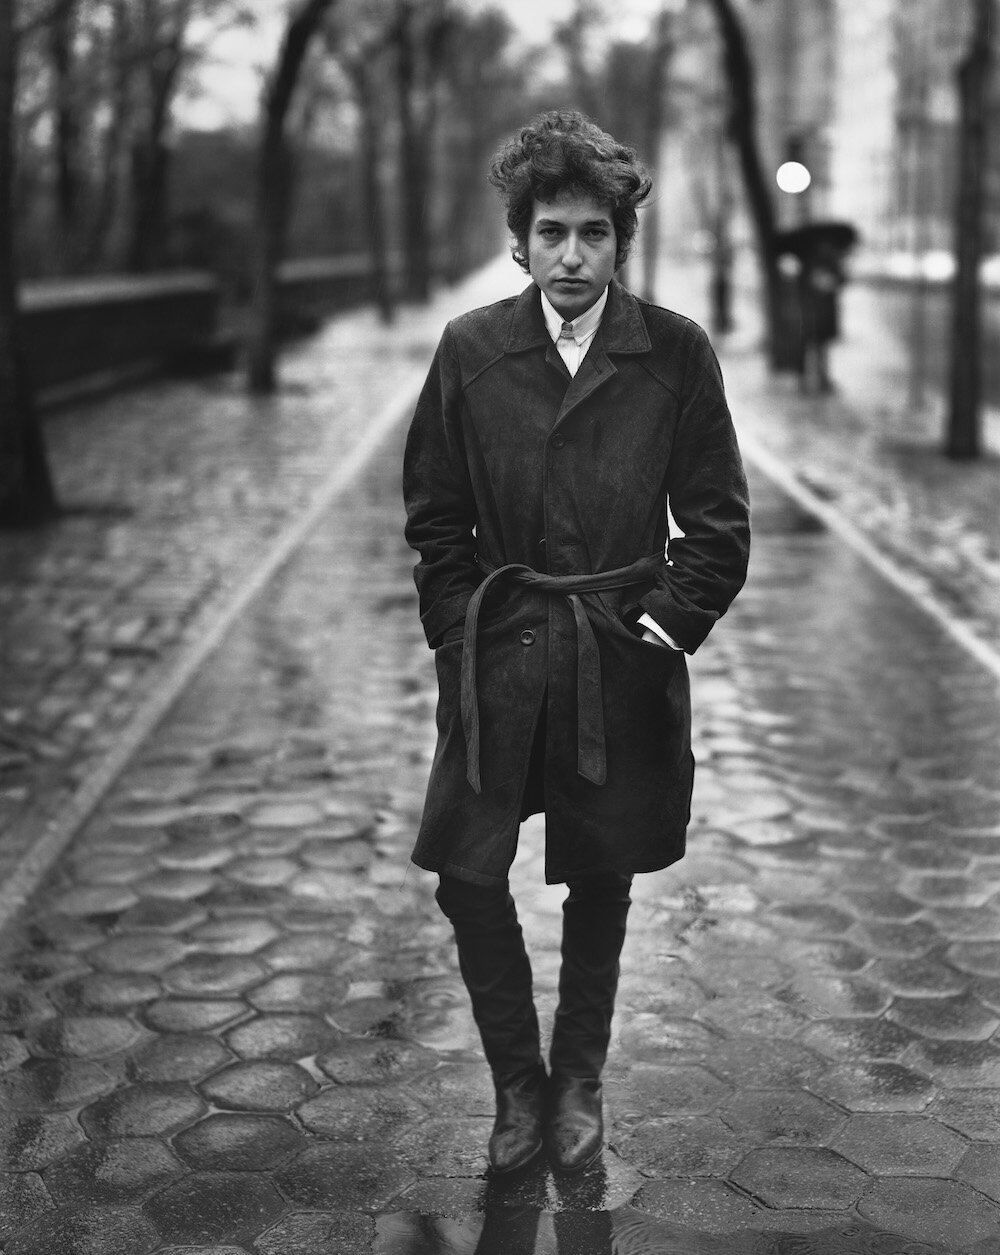 Bob+Dylan,+musician,+New+York,+1965,+edition.jpg